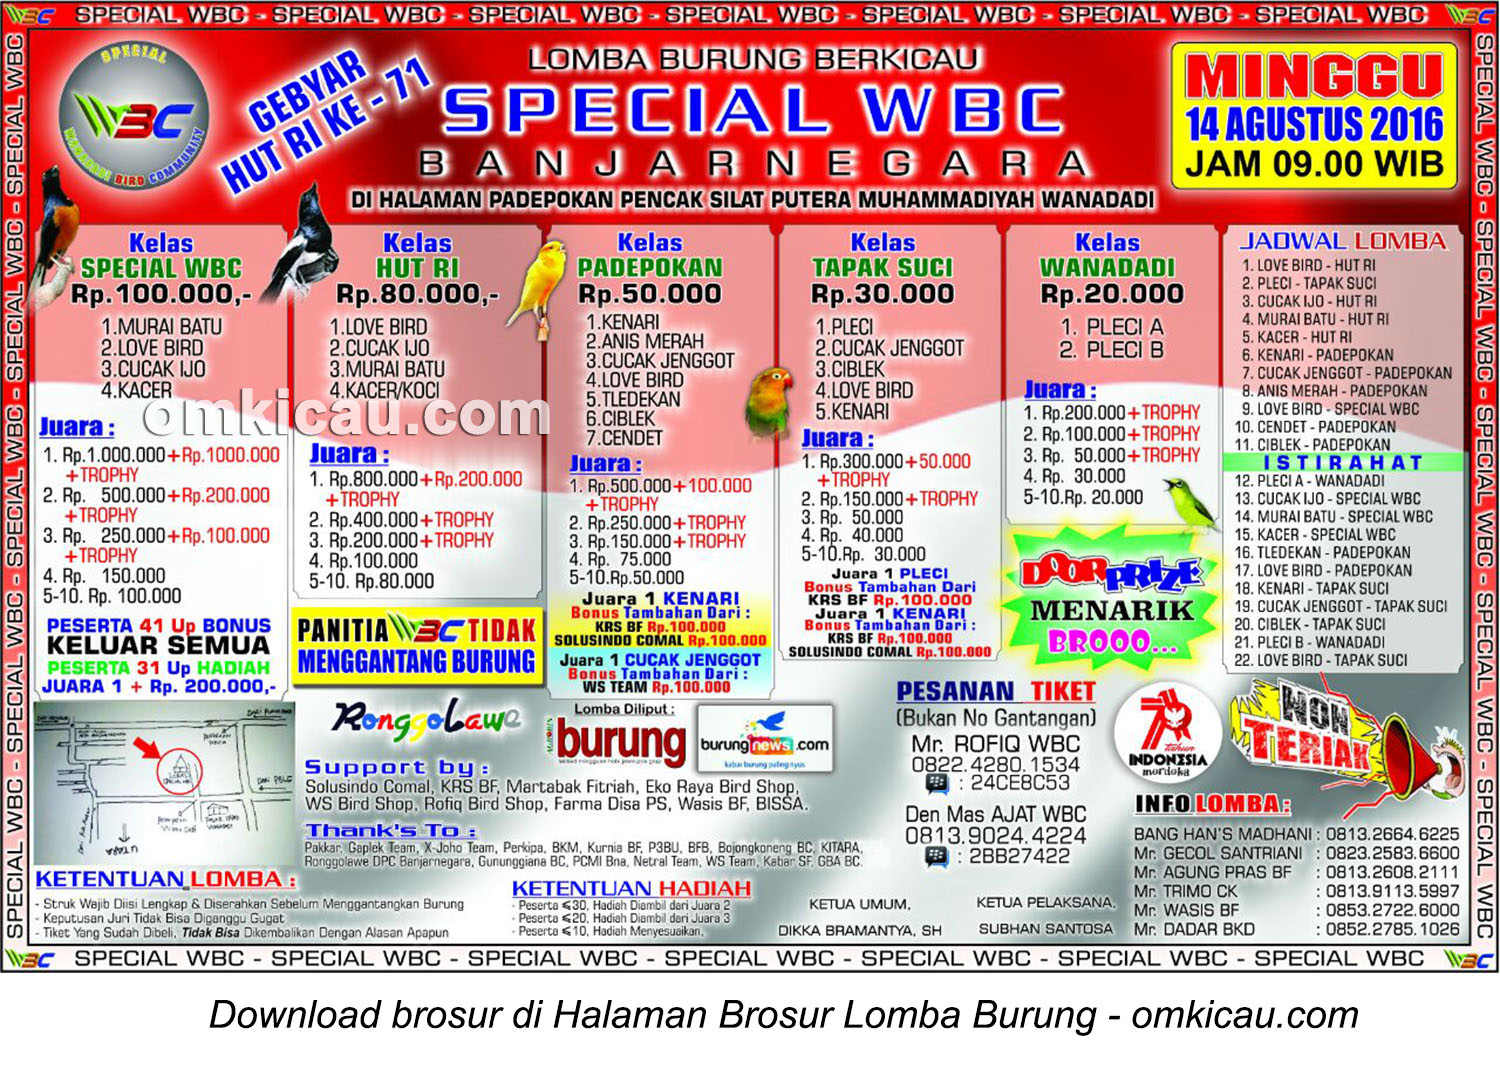 Brosur Lomba Burung Berkicau Special WBC, Banjarnegara, 14 Agustus 2016